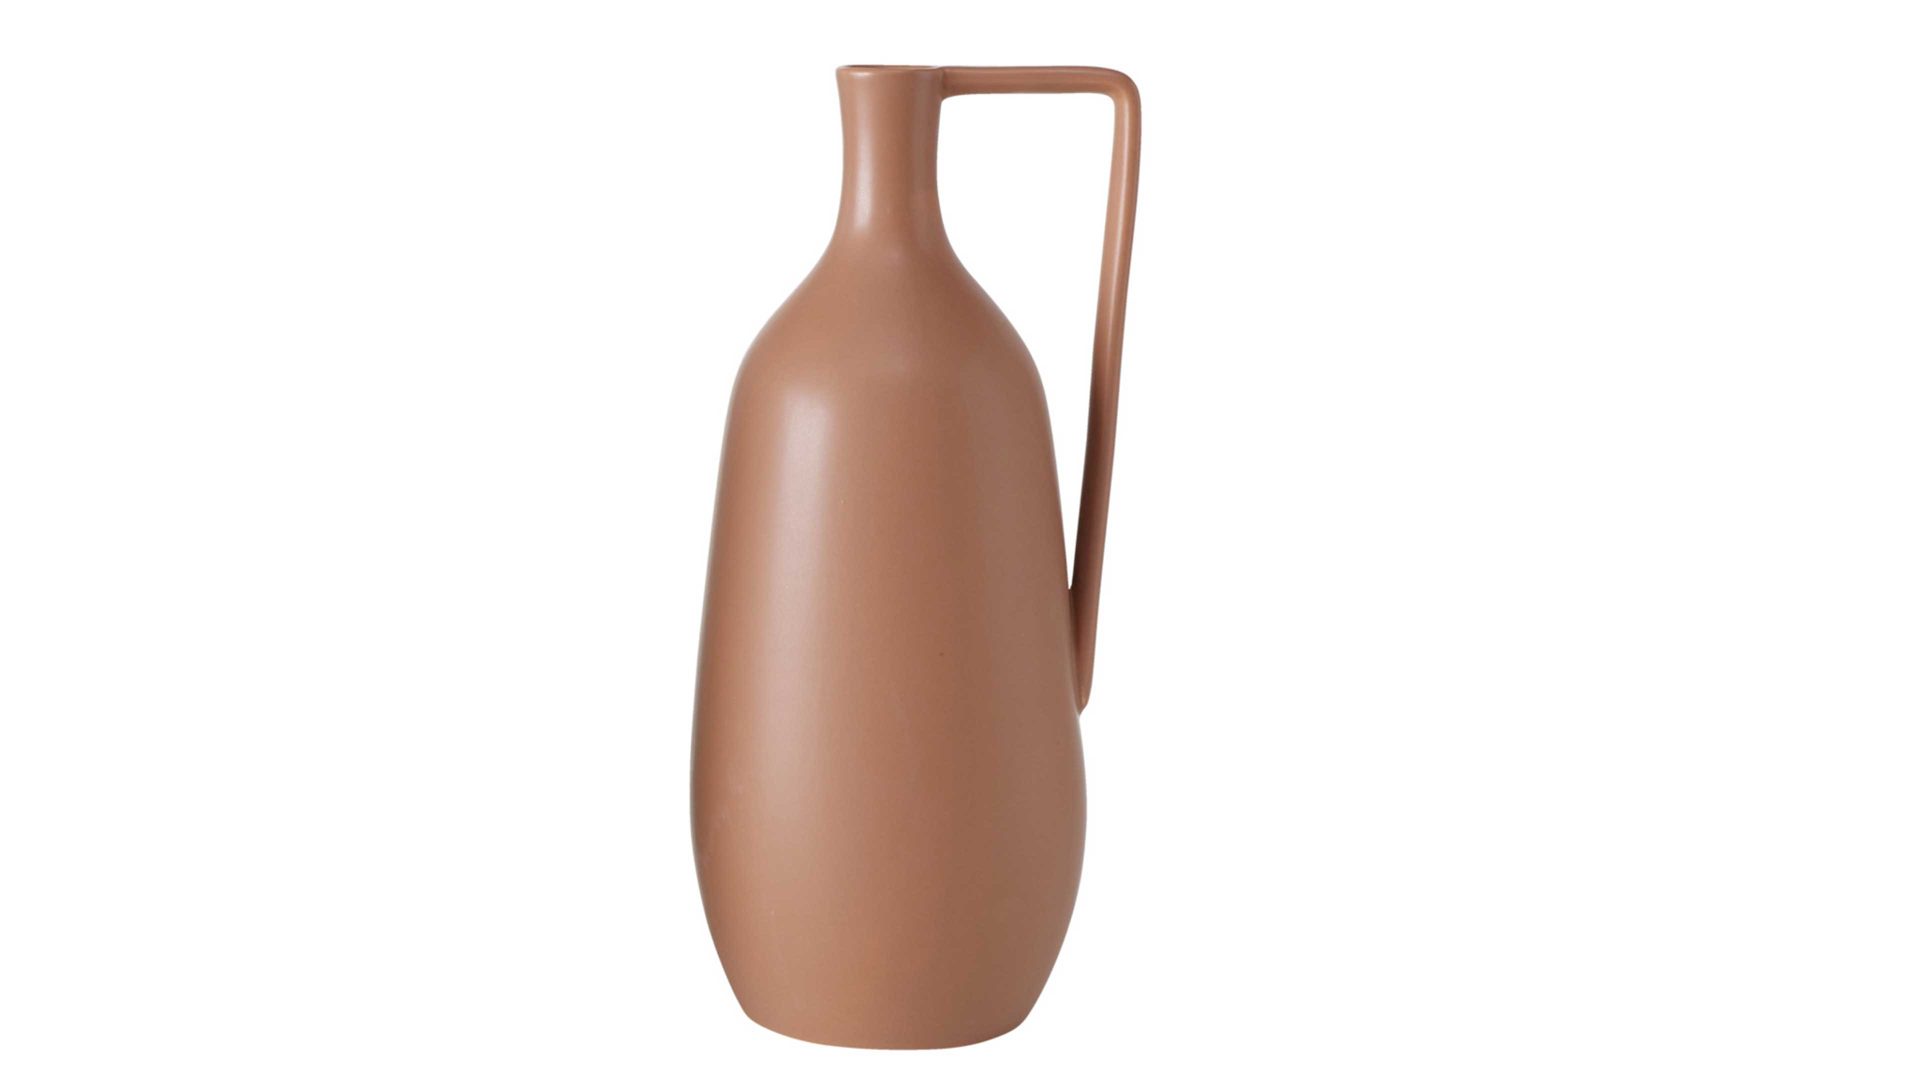 Vase Interliving BEST BUDDYS! aus Keramik in Braun Interliving BEST BUDDYS! Vase Naimo braunes Steingut – Höhe ca. 36 cm